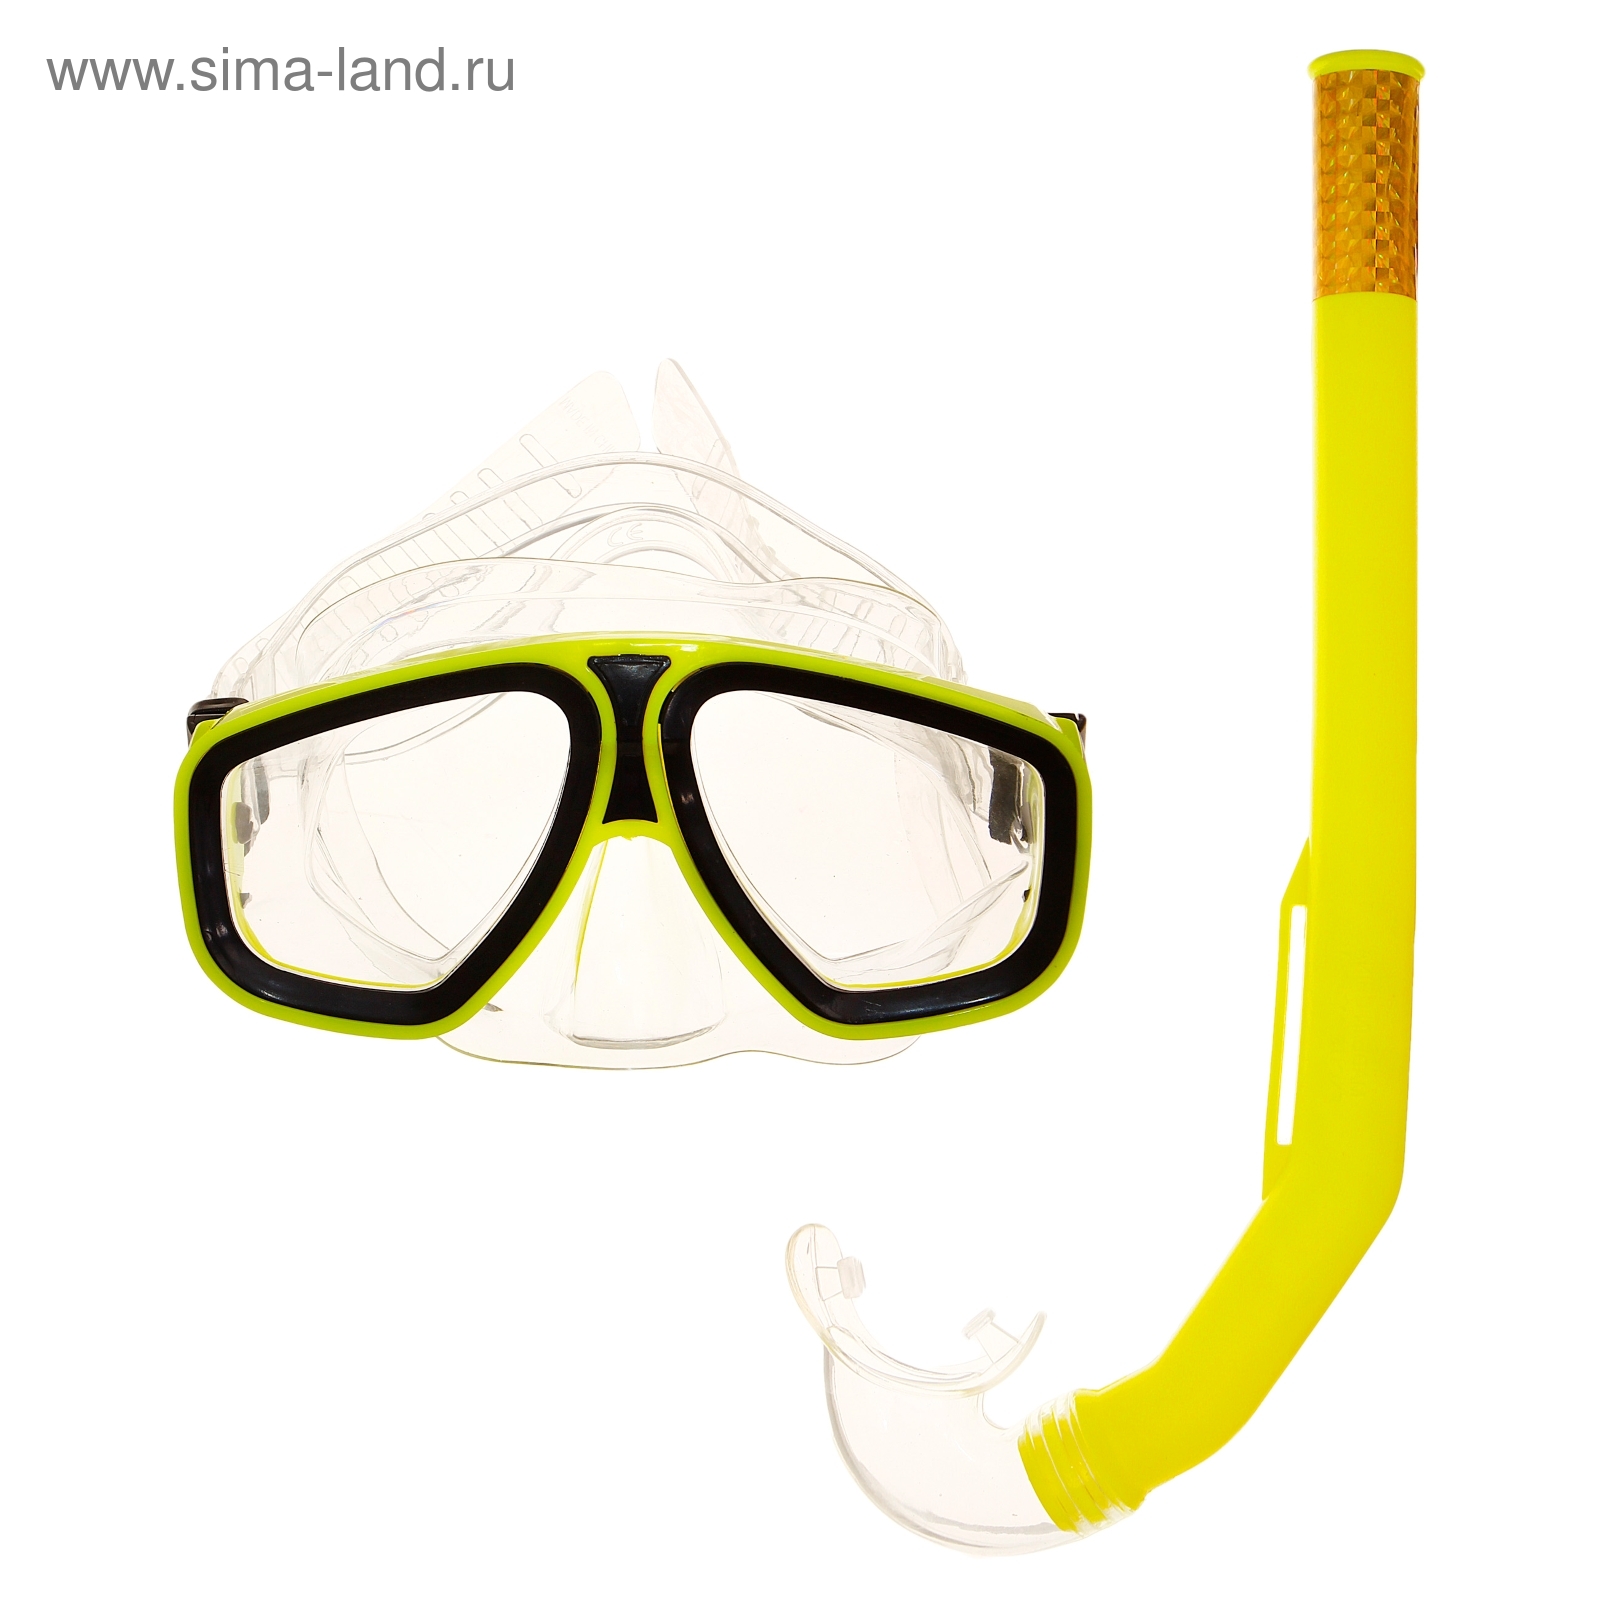 Набор для подводного плавания, 2 предмета: маска, трубка, в пакете, цвета МИКС